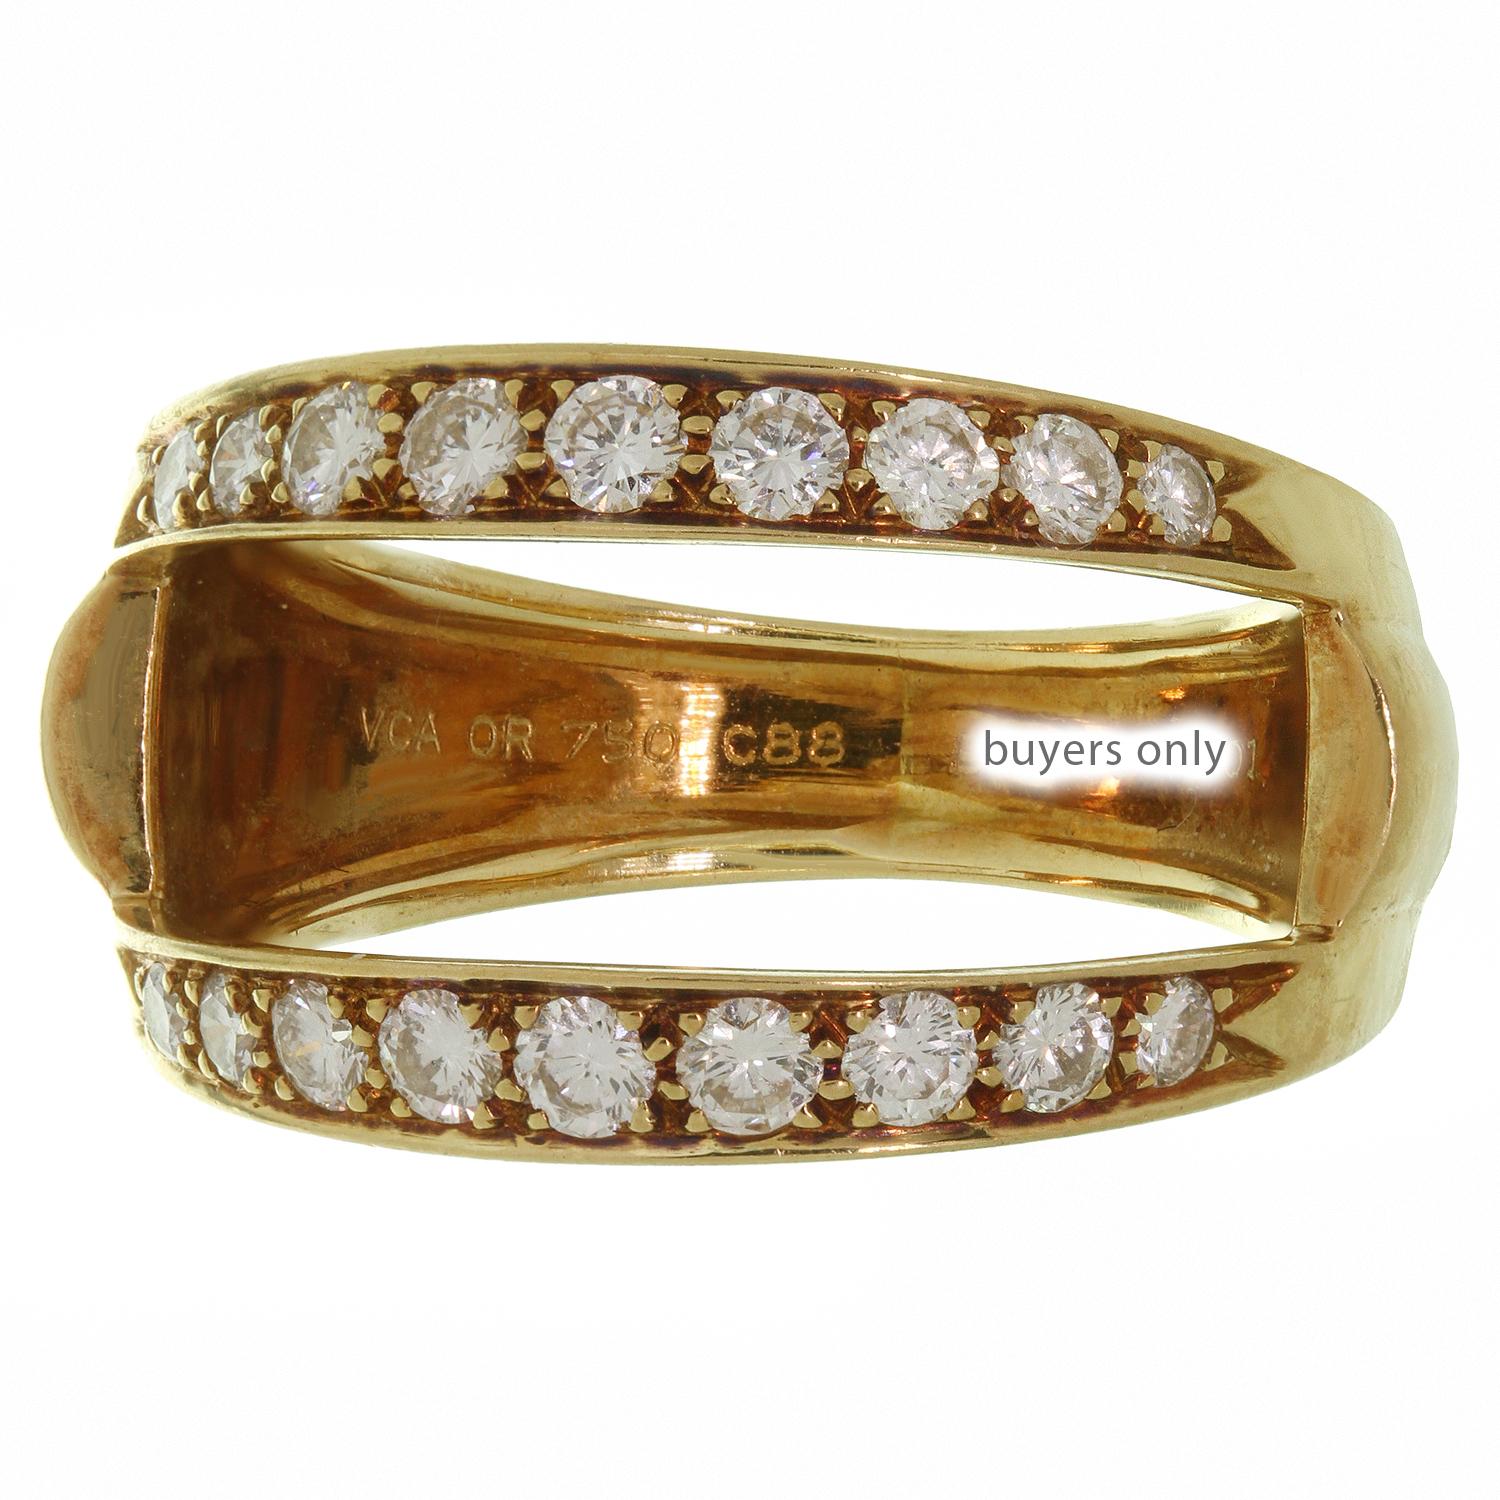 Brilliant Cut Van Cleef & Arpels Diamond Gemstone Interchangeable Yellow Gold Ring